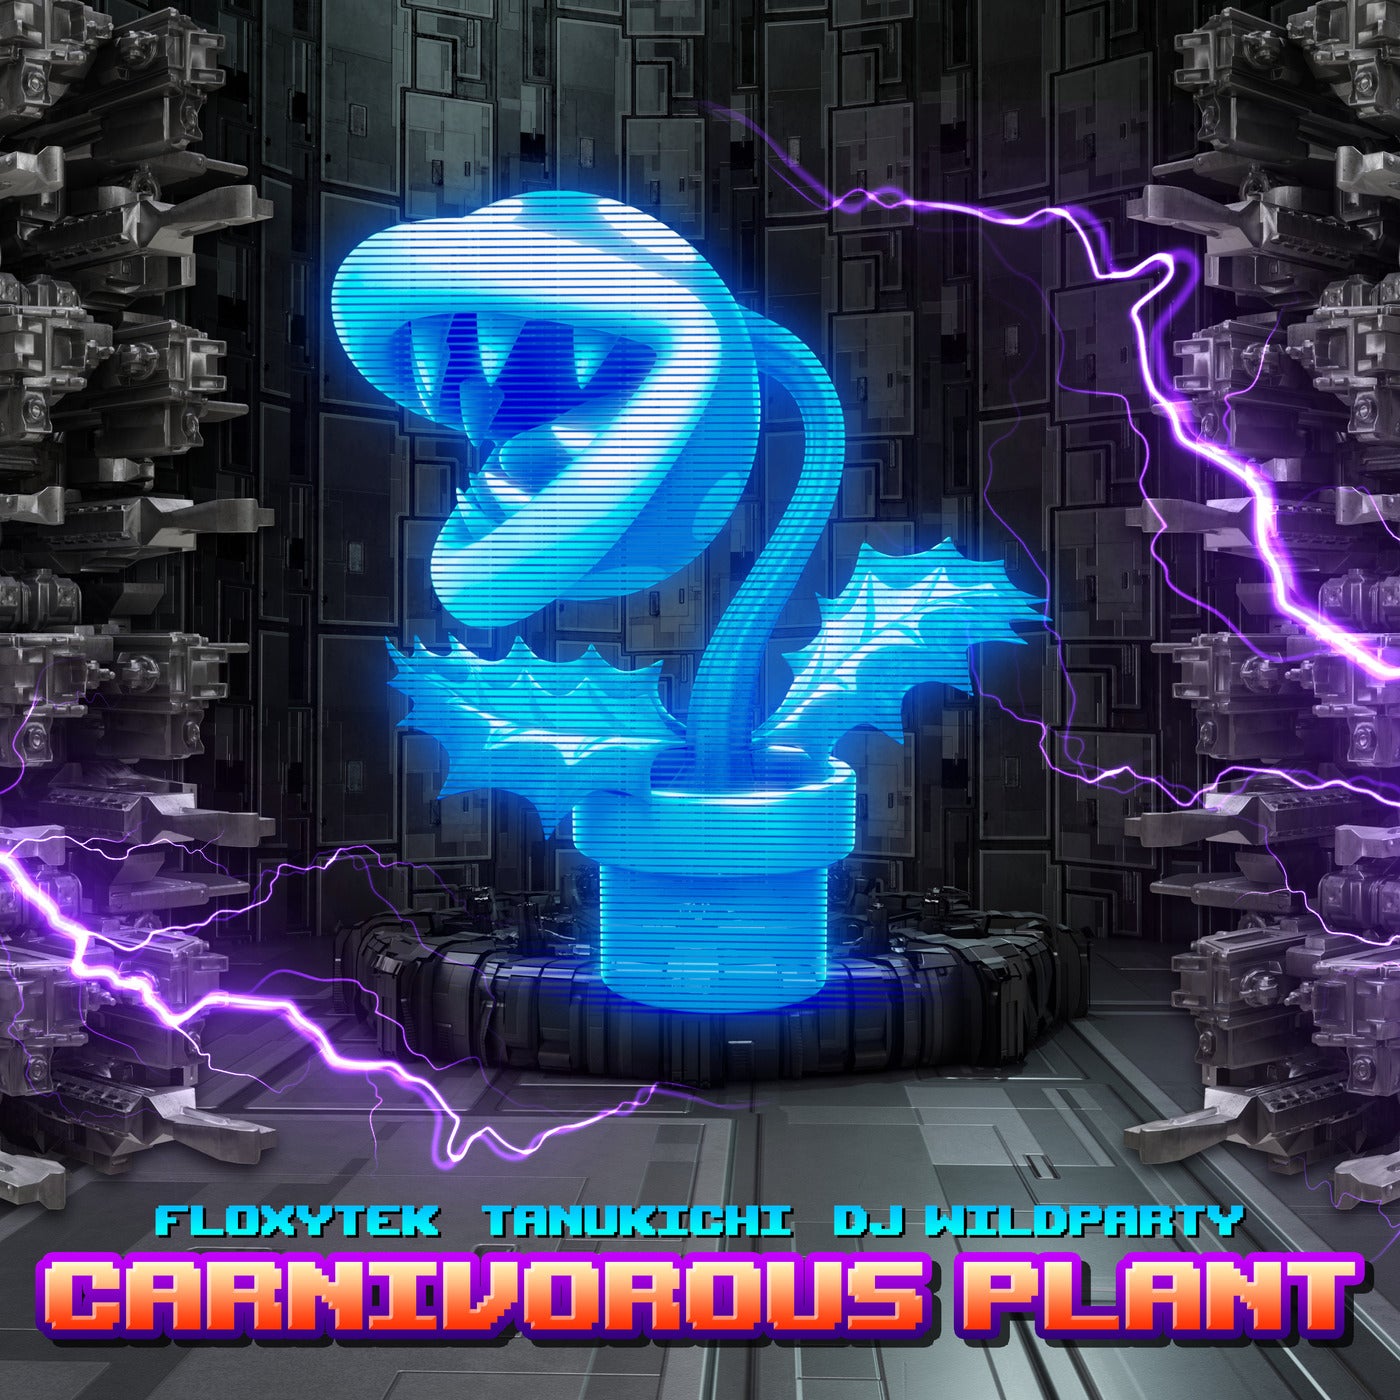 Carnivorous Plant